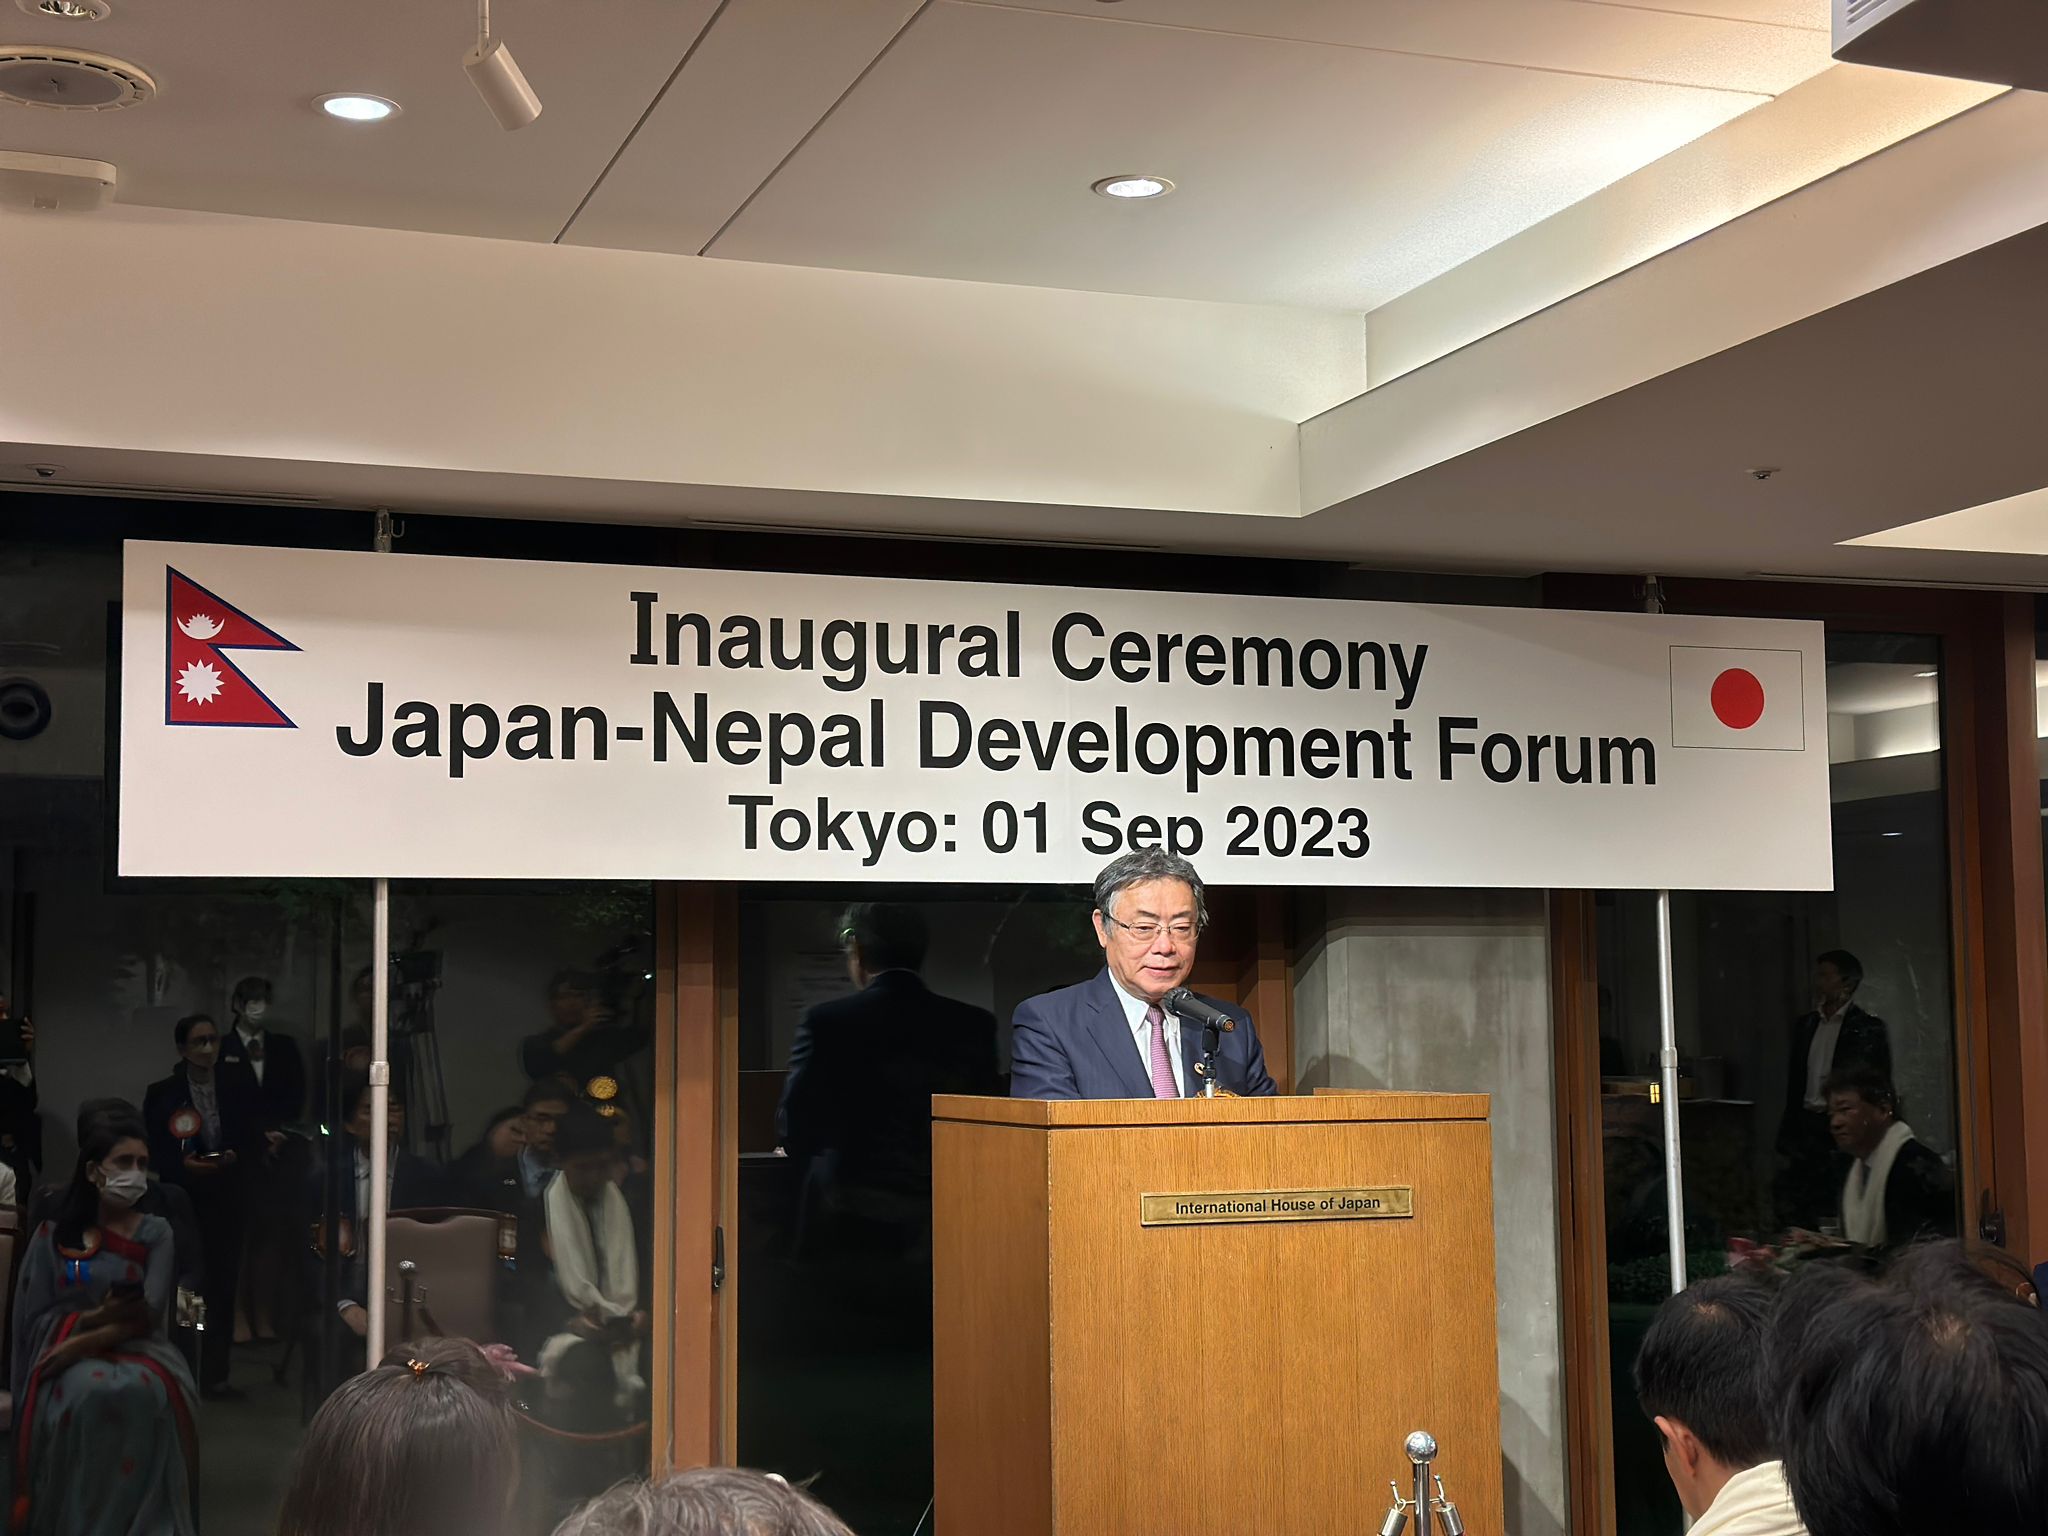 जापान–नेपाल विकास मञ्चको स्थापना, अध्यक्षमा मोतोयुकी ओदाची